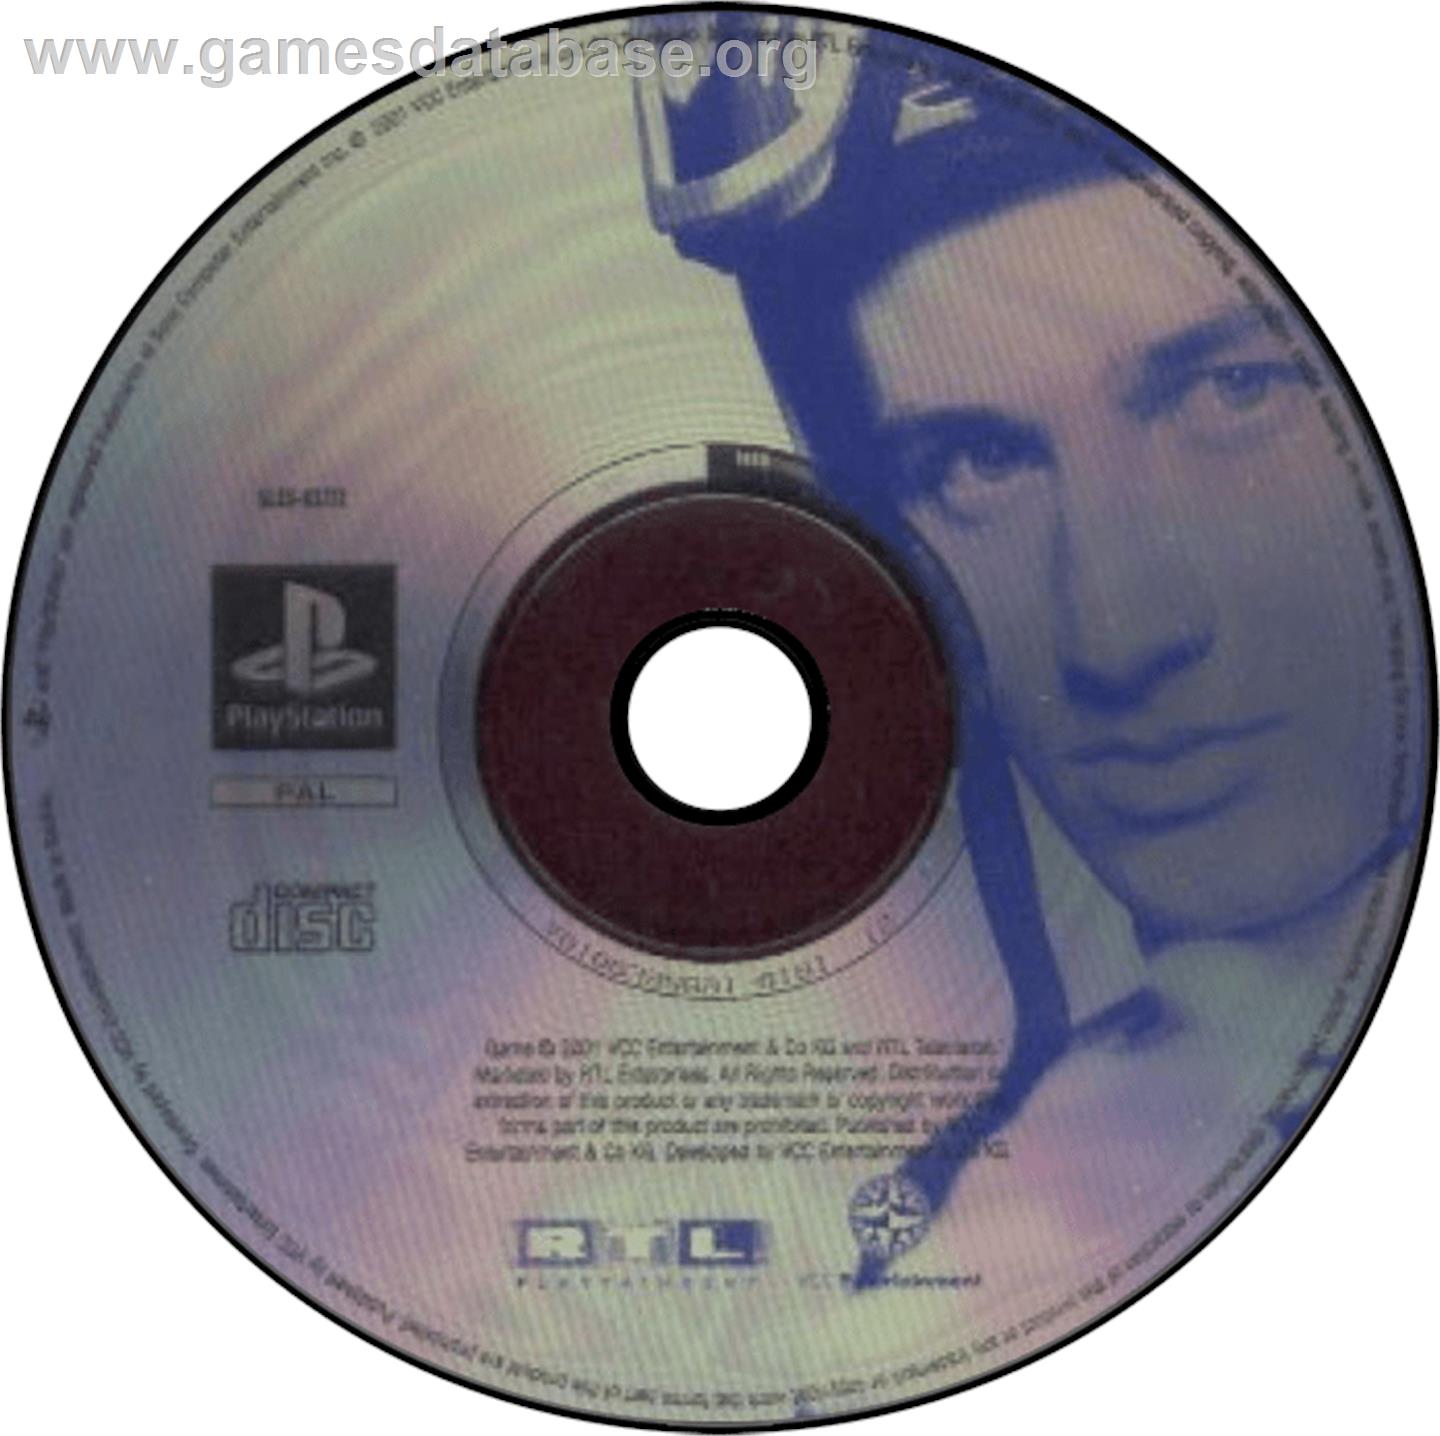 RTL Skispringen 2002 - Sony Playstation - Artwork - Disc